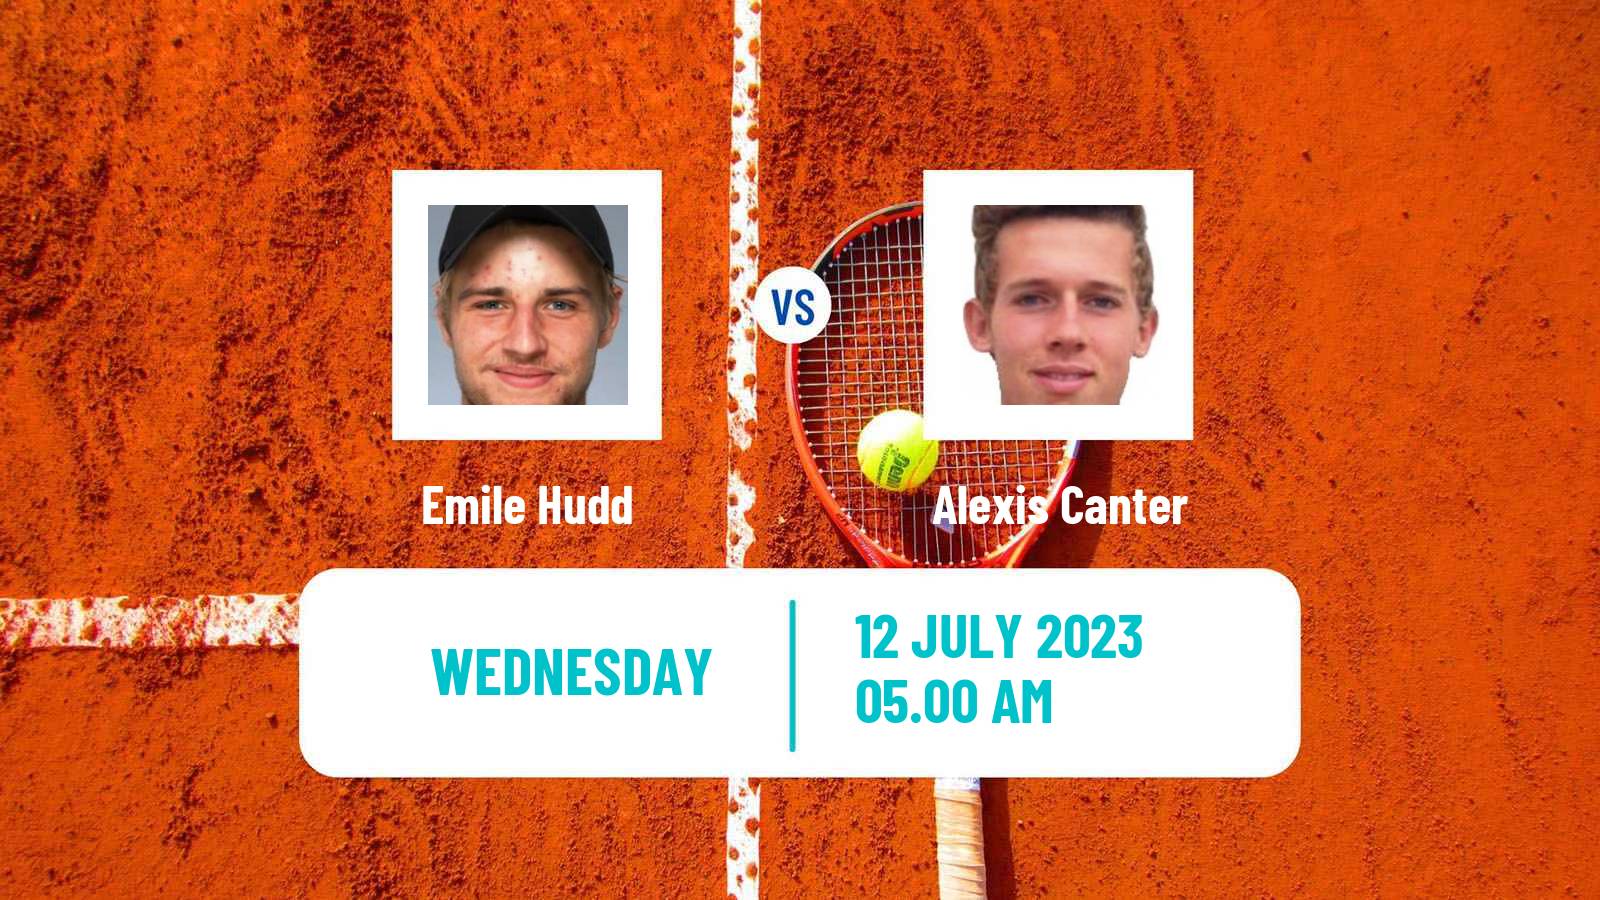 Tennis ITF M25 Nottingham 4 Men Emile Hudd - Alexis Canter